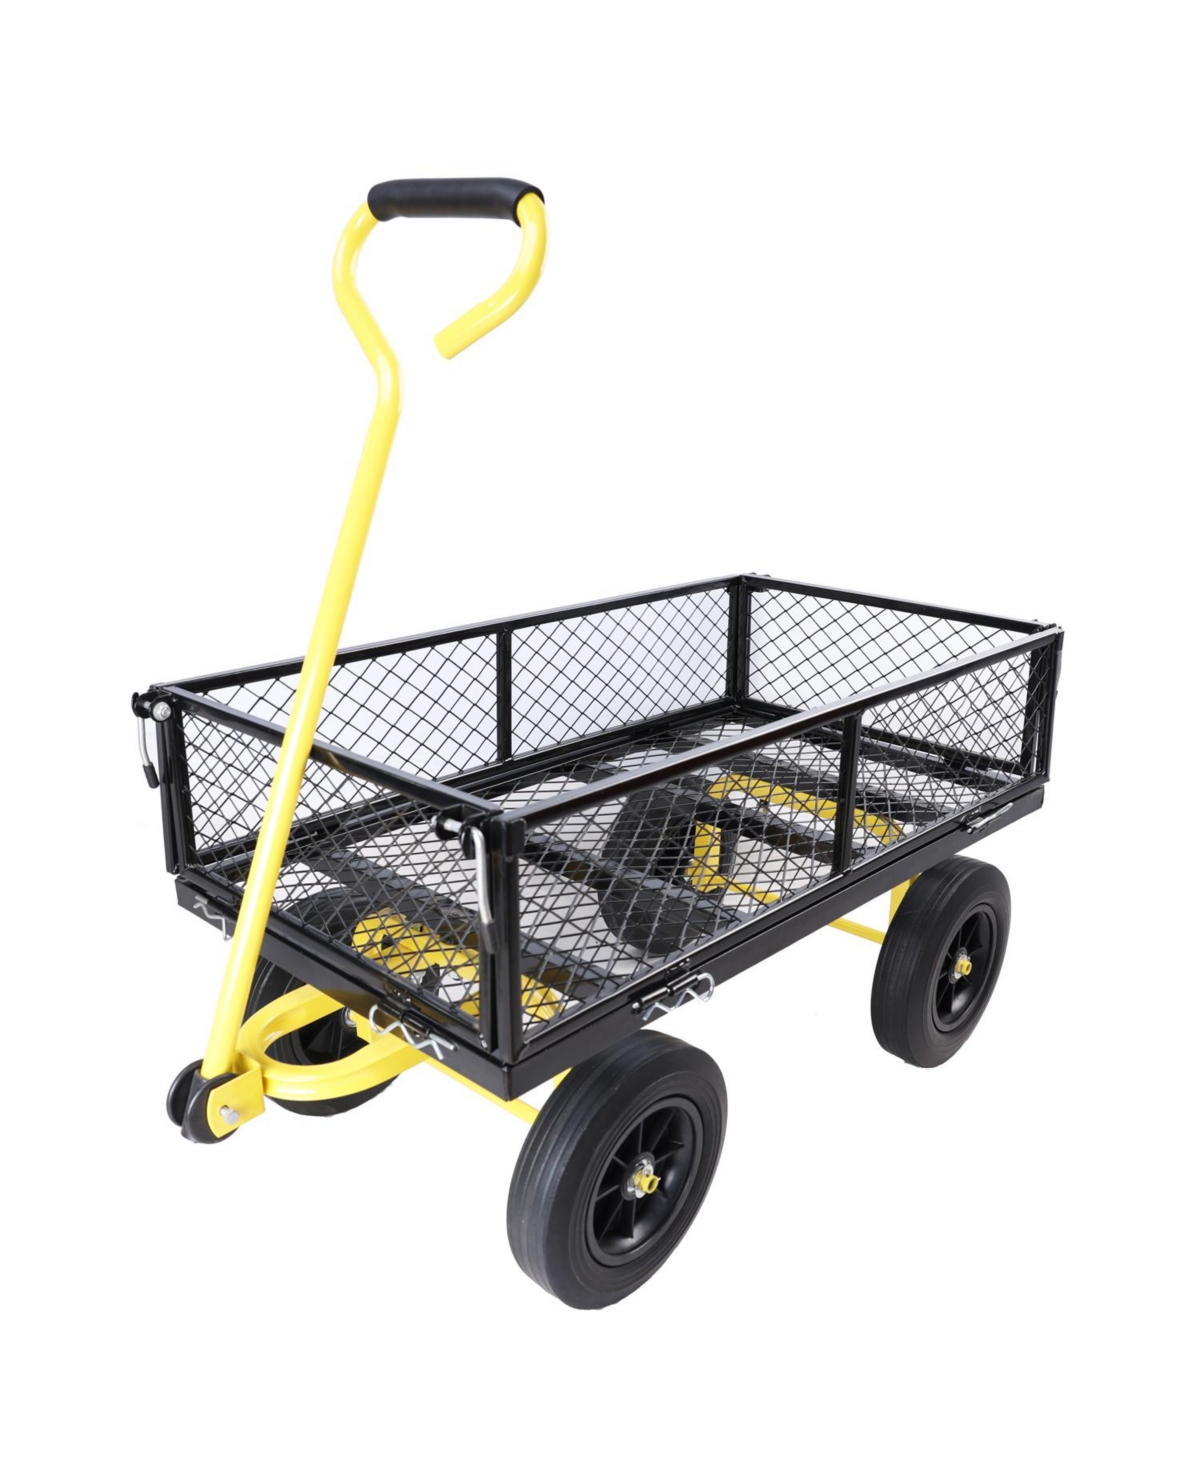 Solid Wheels Tools Cart Wagon Cart Garden Cart Trucks Make It Easier To Transport Firewood - Black